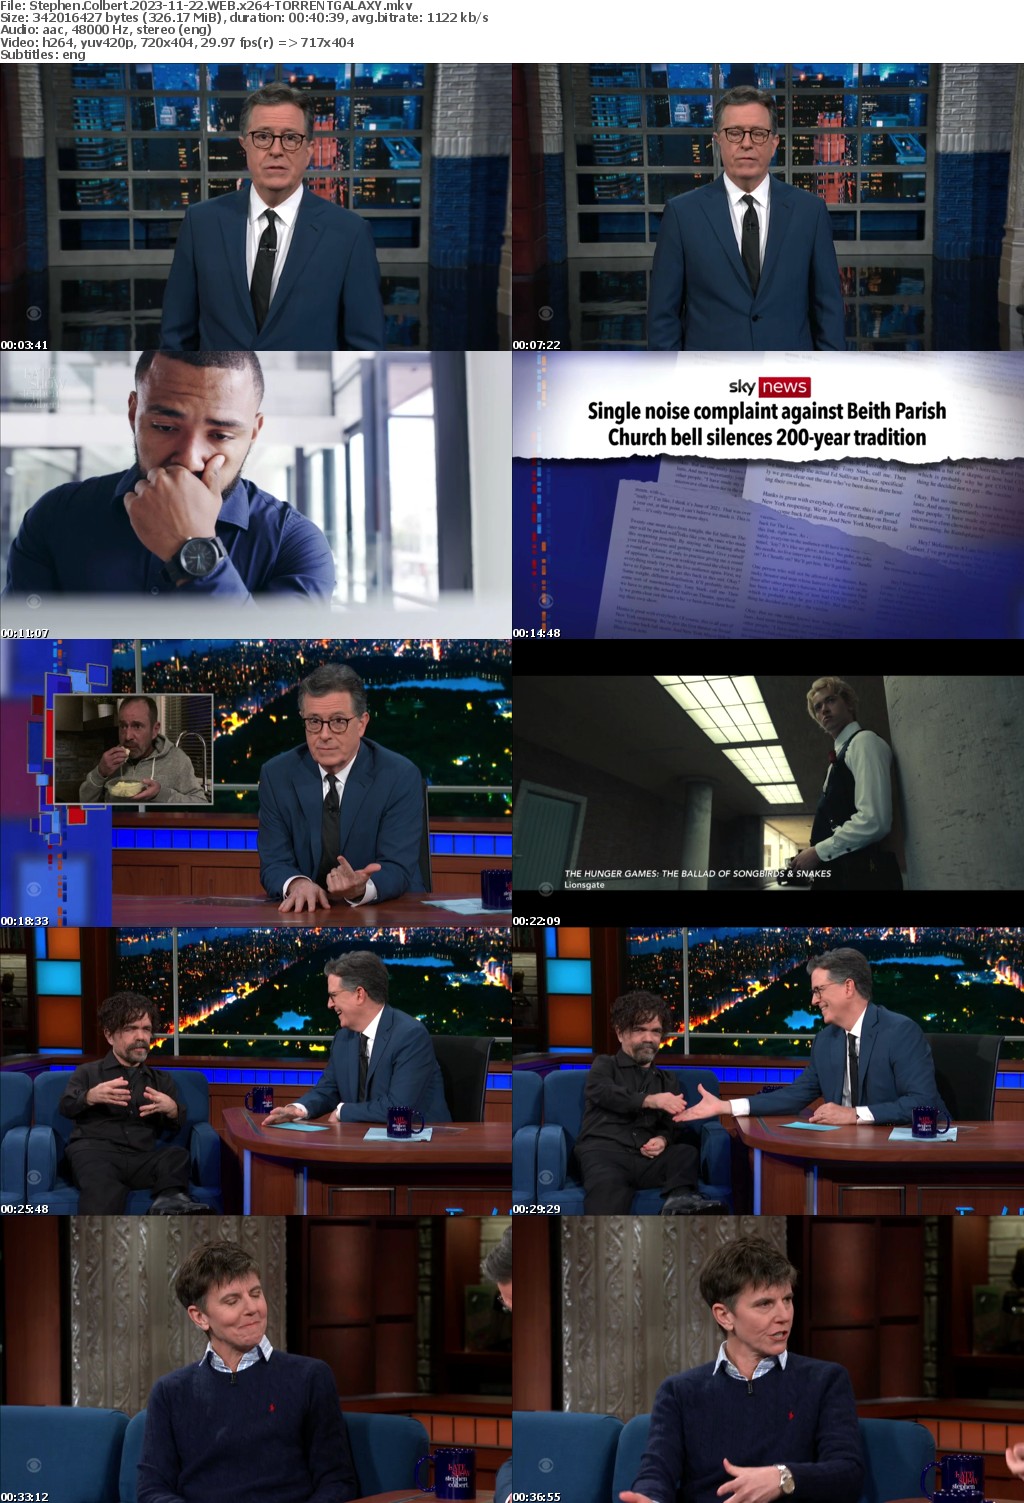 Stephen Colbert 2023-11-22 WEB x264-GALAXY